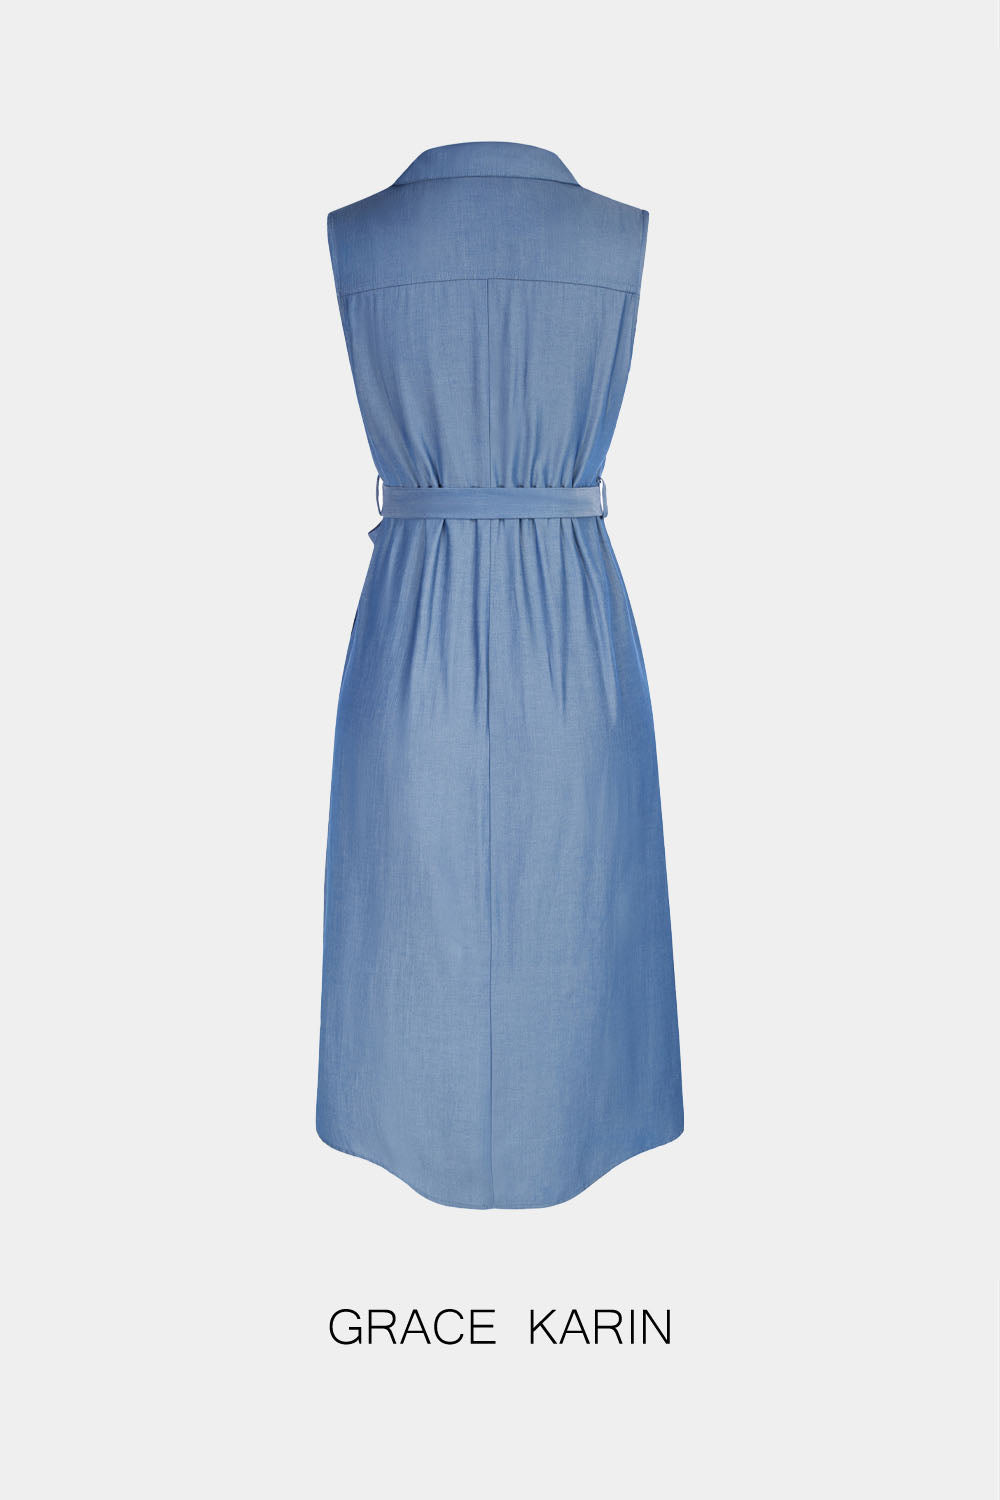 【$19.99 Flash Sale!】GRACE KARIN Lapel Collar Dress with Belt Sleeveless Dress